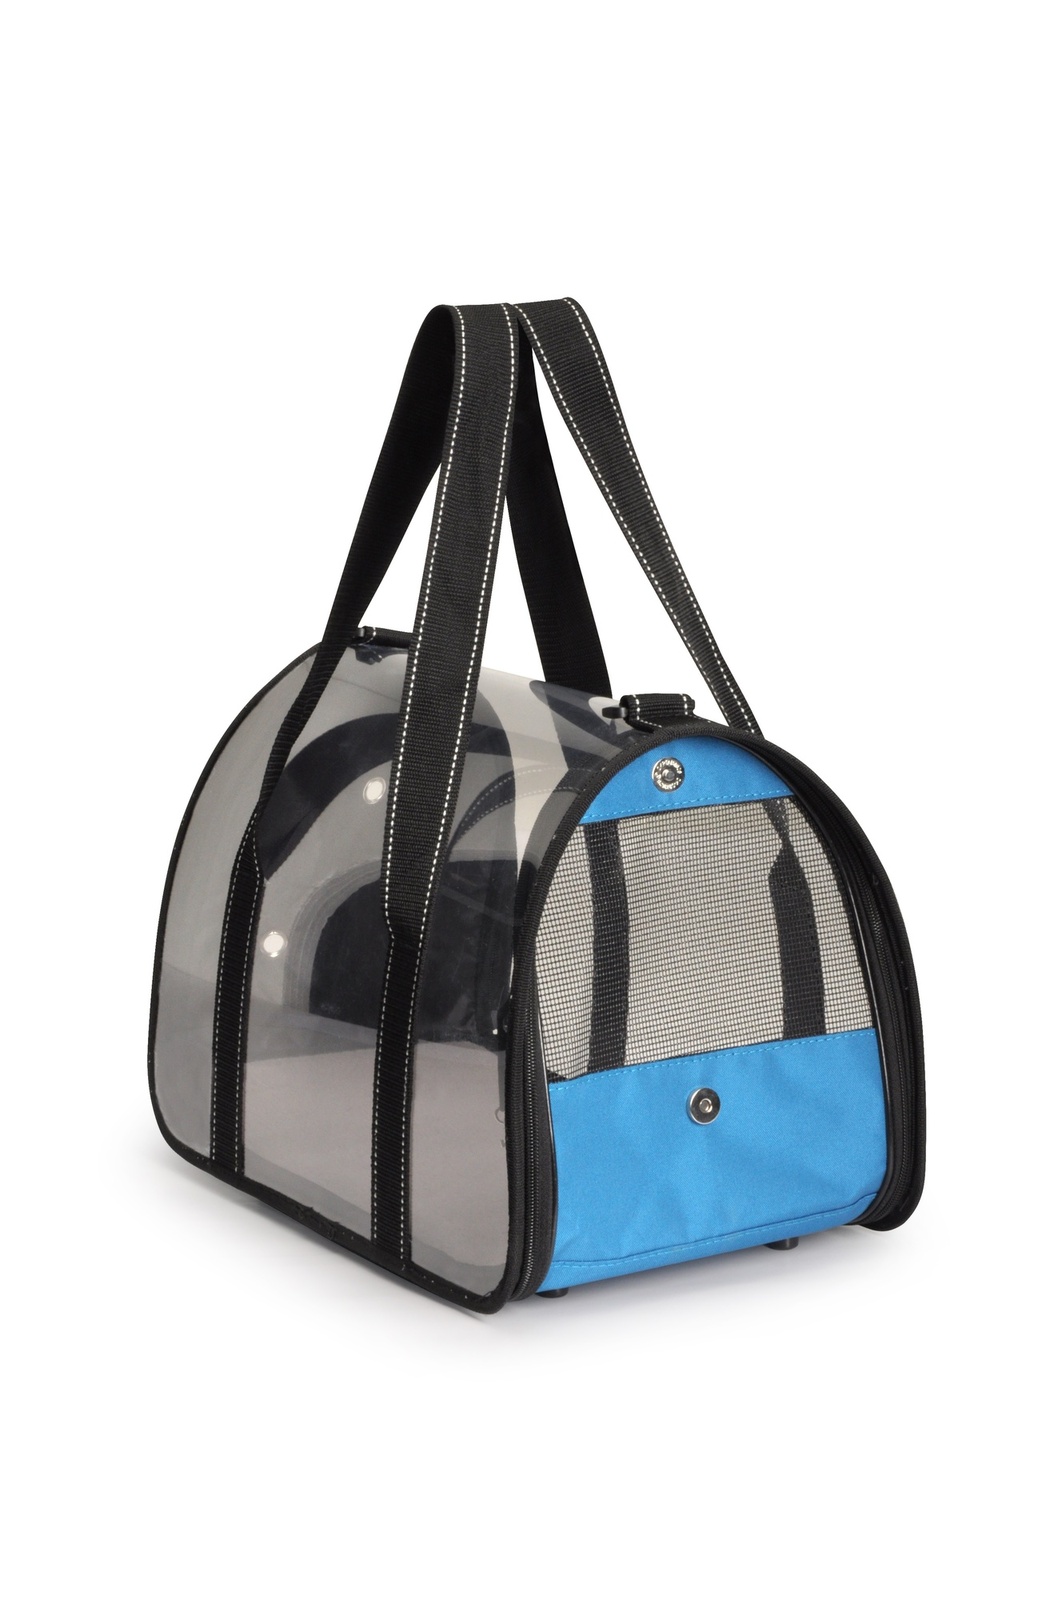 Camon Camon сумка-переноска прозрачная, 42x25x25 см, голубая (670 г) camon camon переноска для домашних животных pratiko зеленая 48x31 5x33 см 1 07 кг